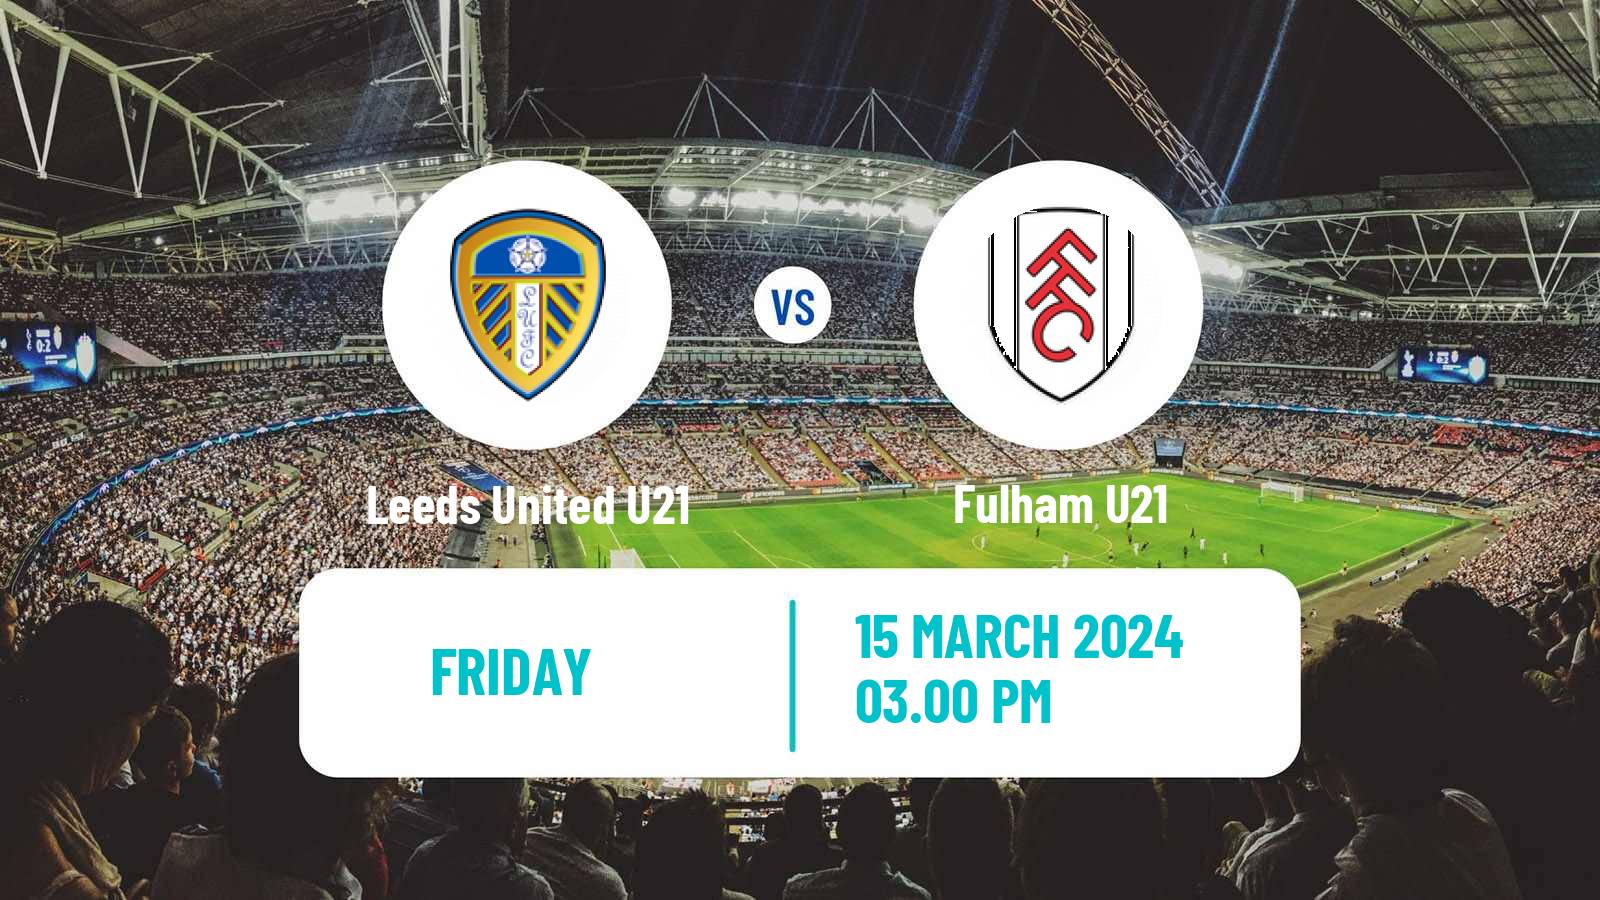 Soccer English Premier League 2 Leeds United U21 - Fulham U21